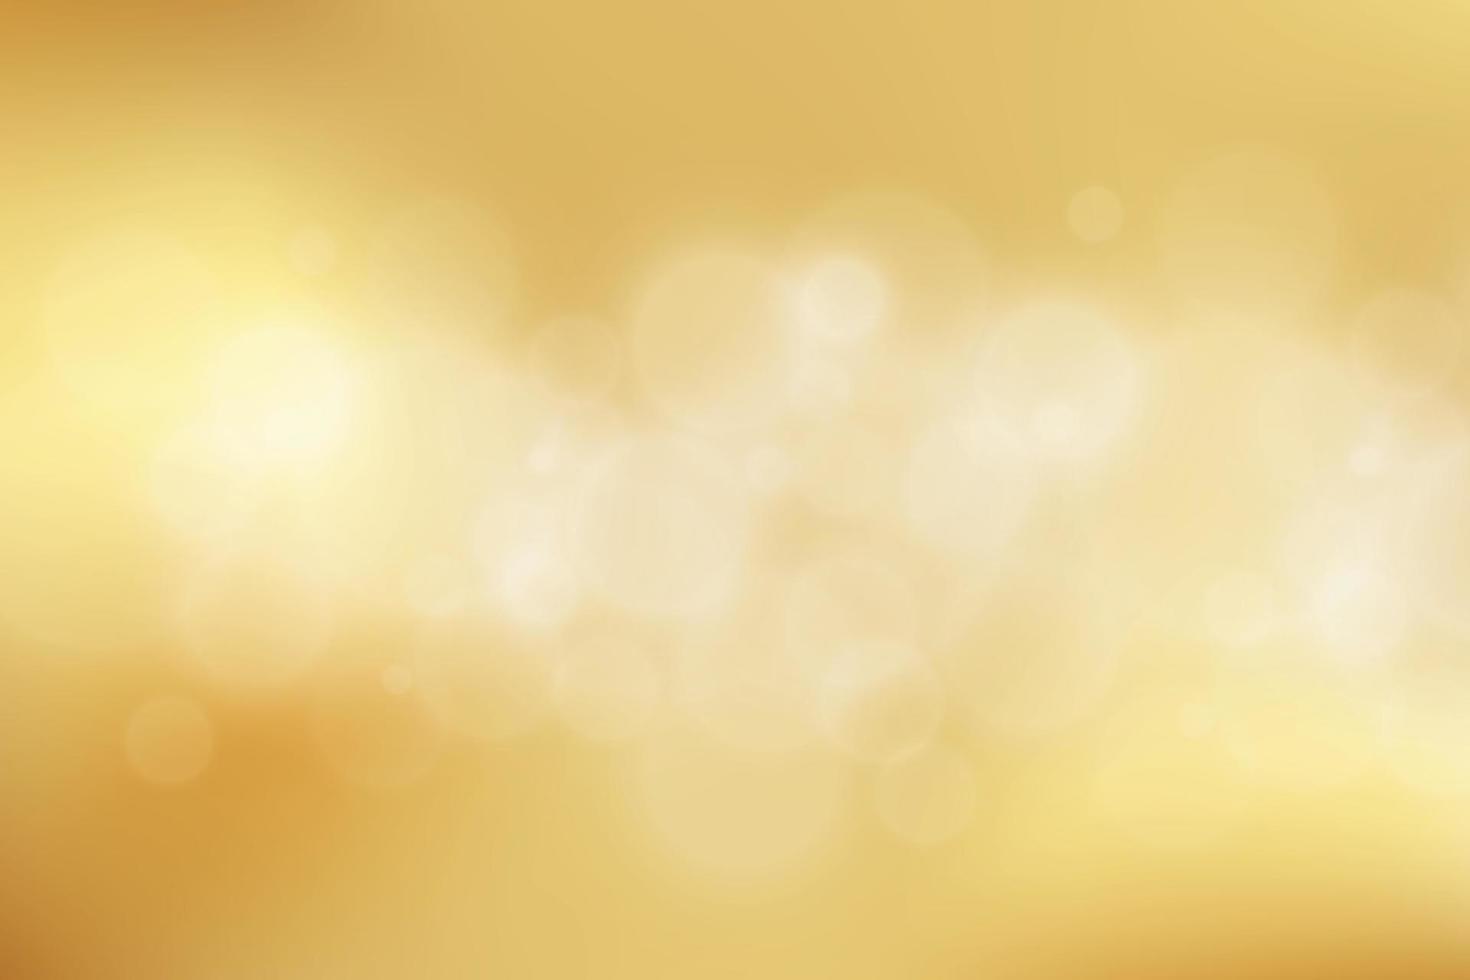 Gradiente borroso abstracto dorado con bokeh, fondo dorado claro. ilustración vectorial. vector